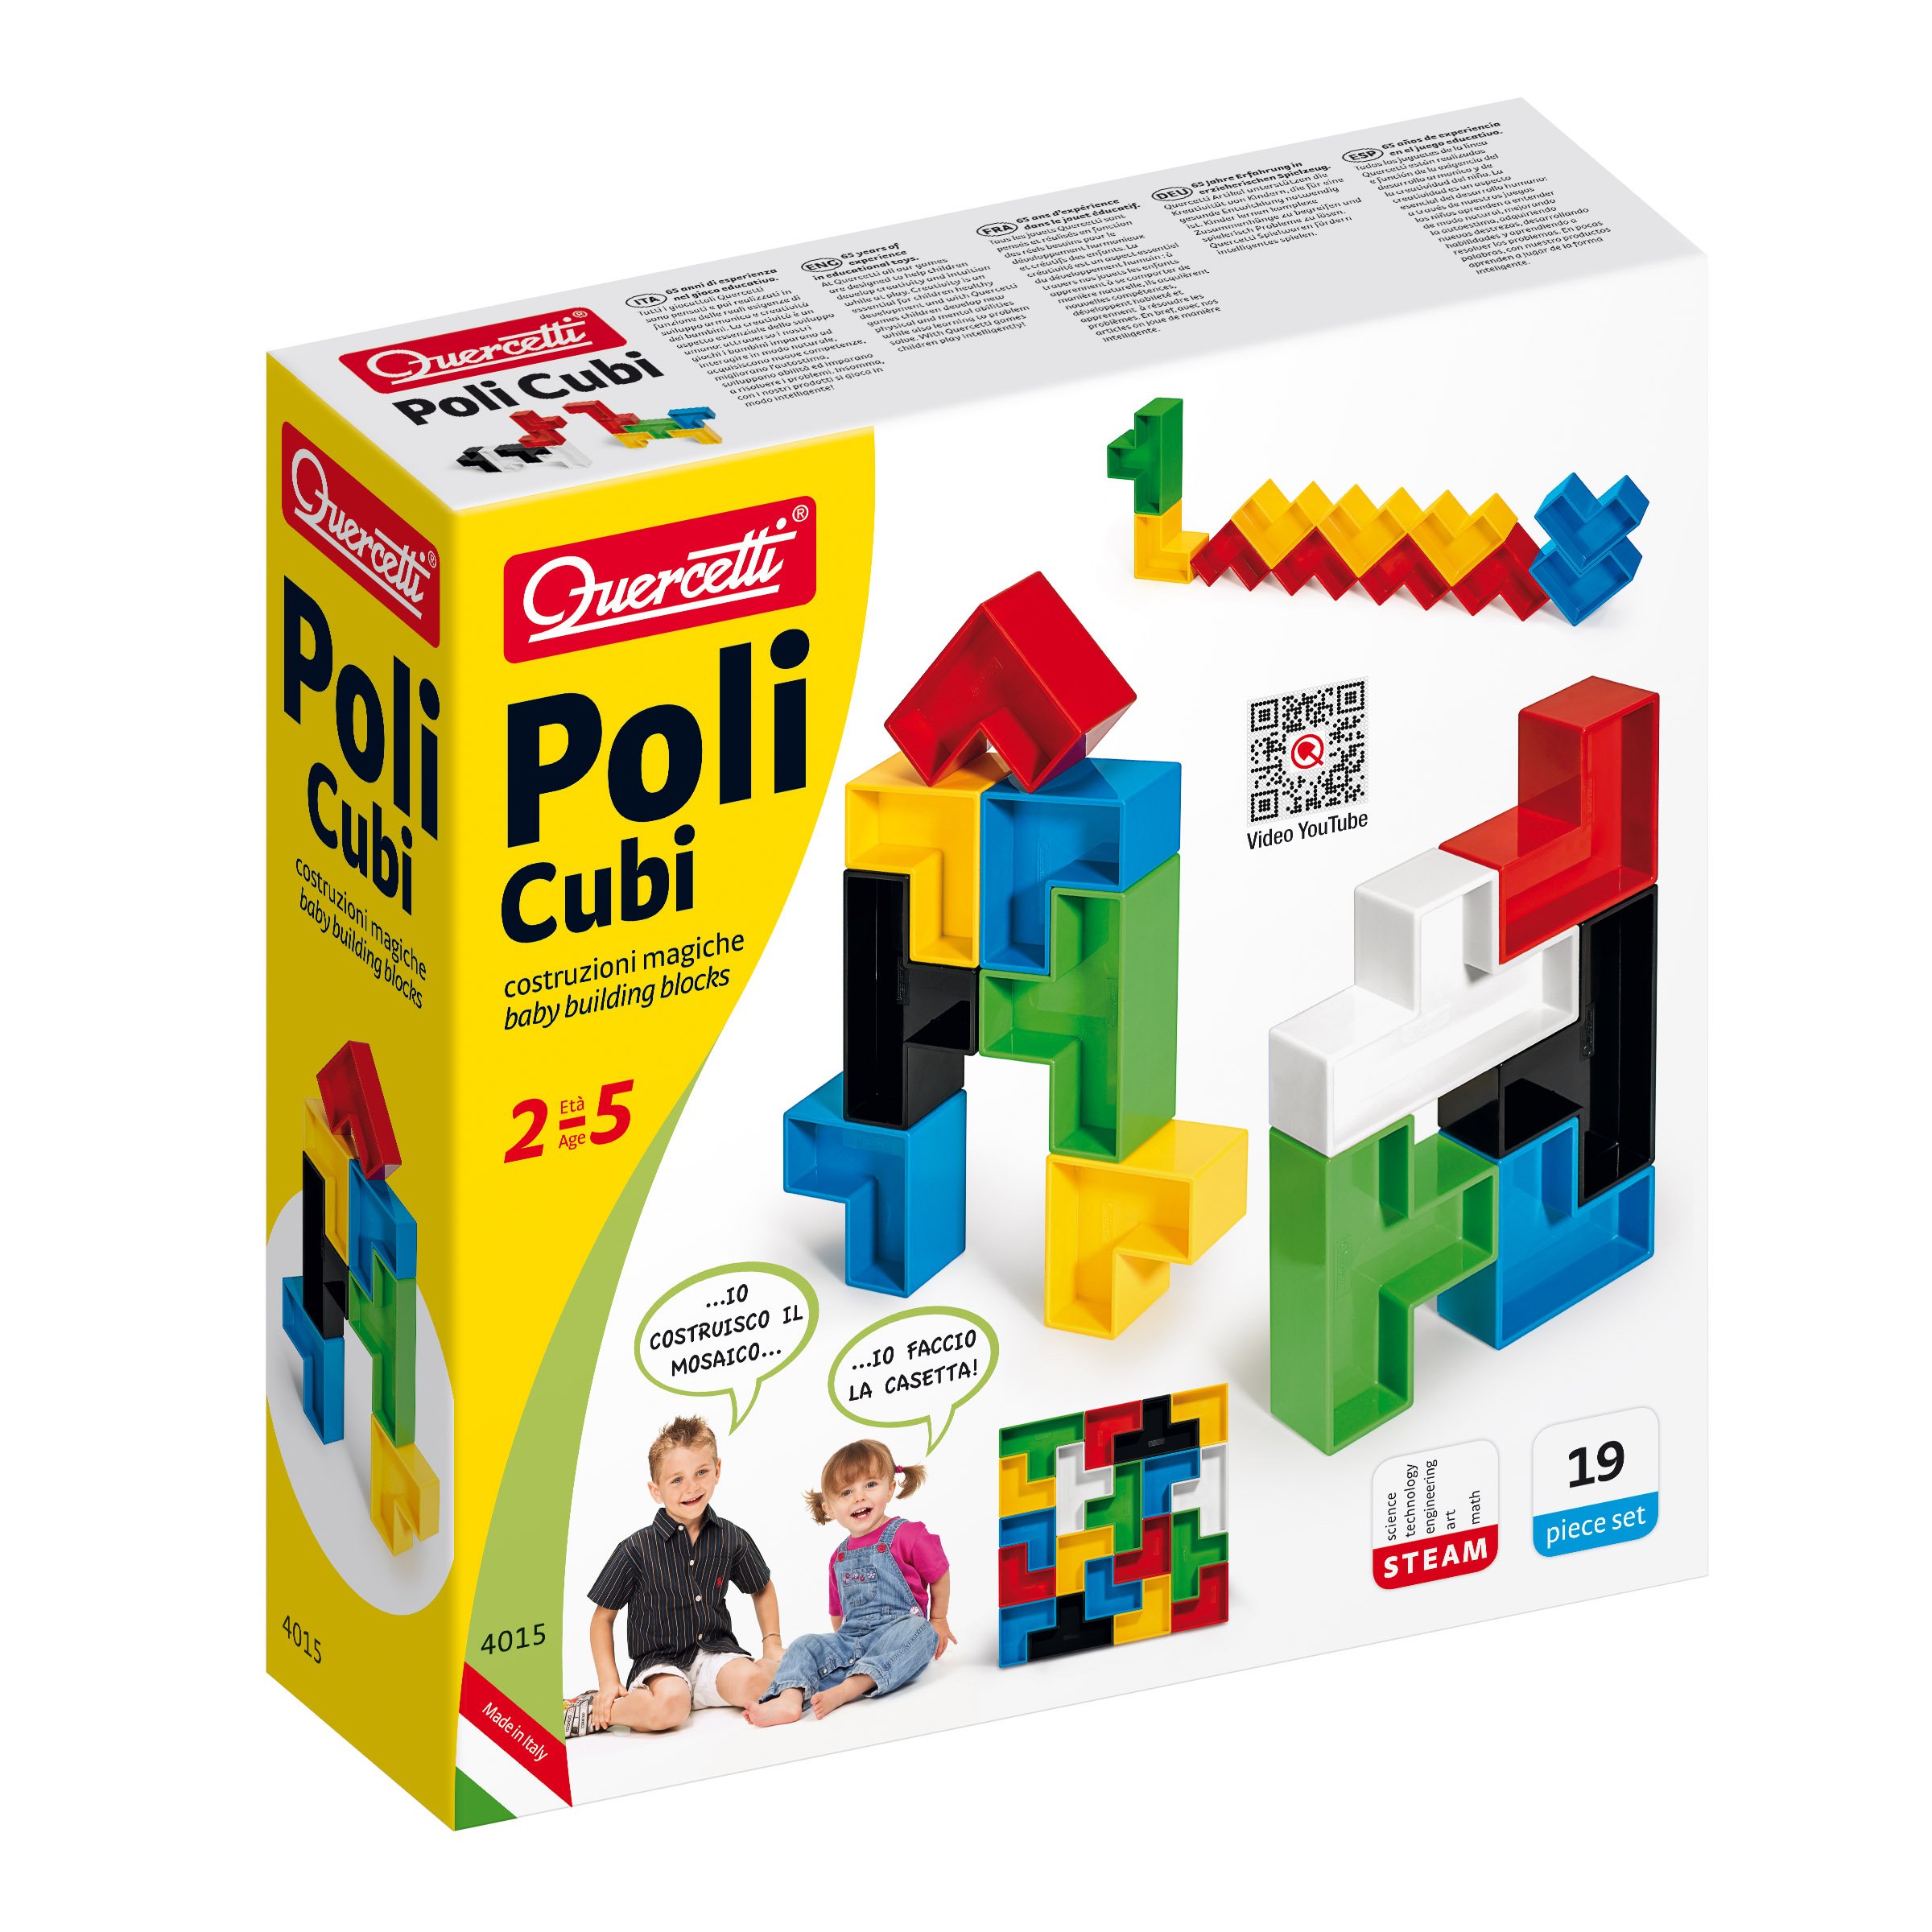 Quercetti Poli Cubi Construction Magic Set